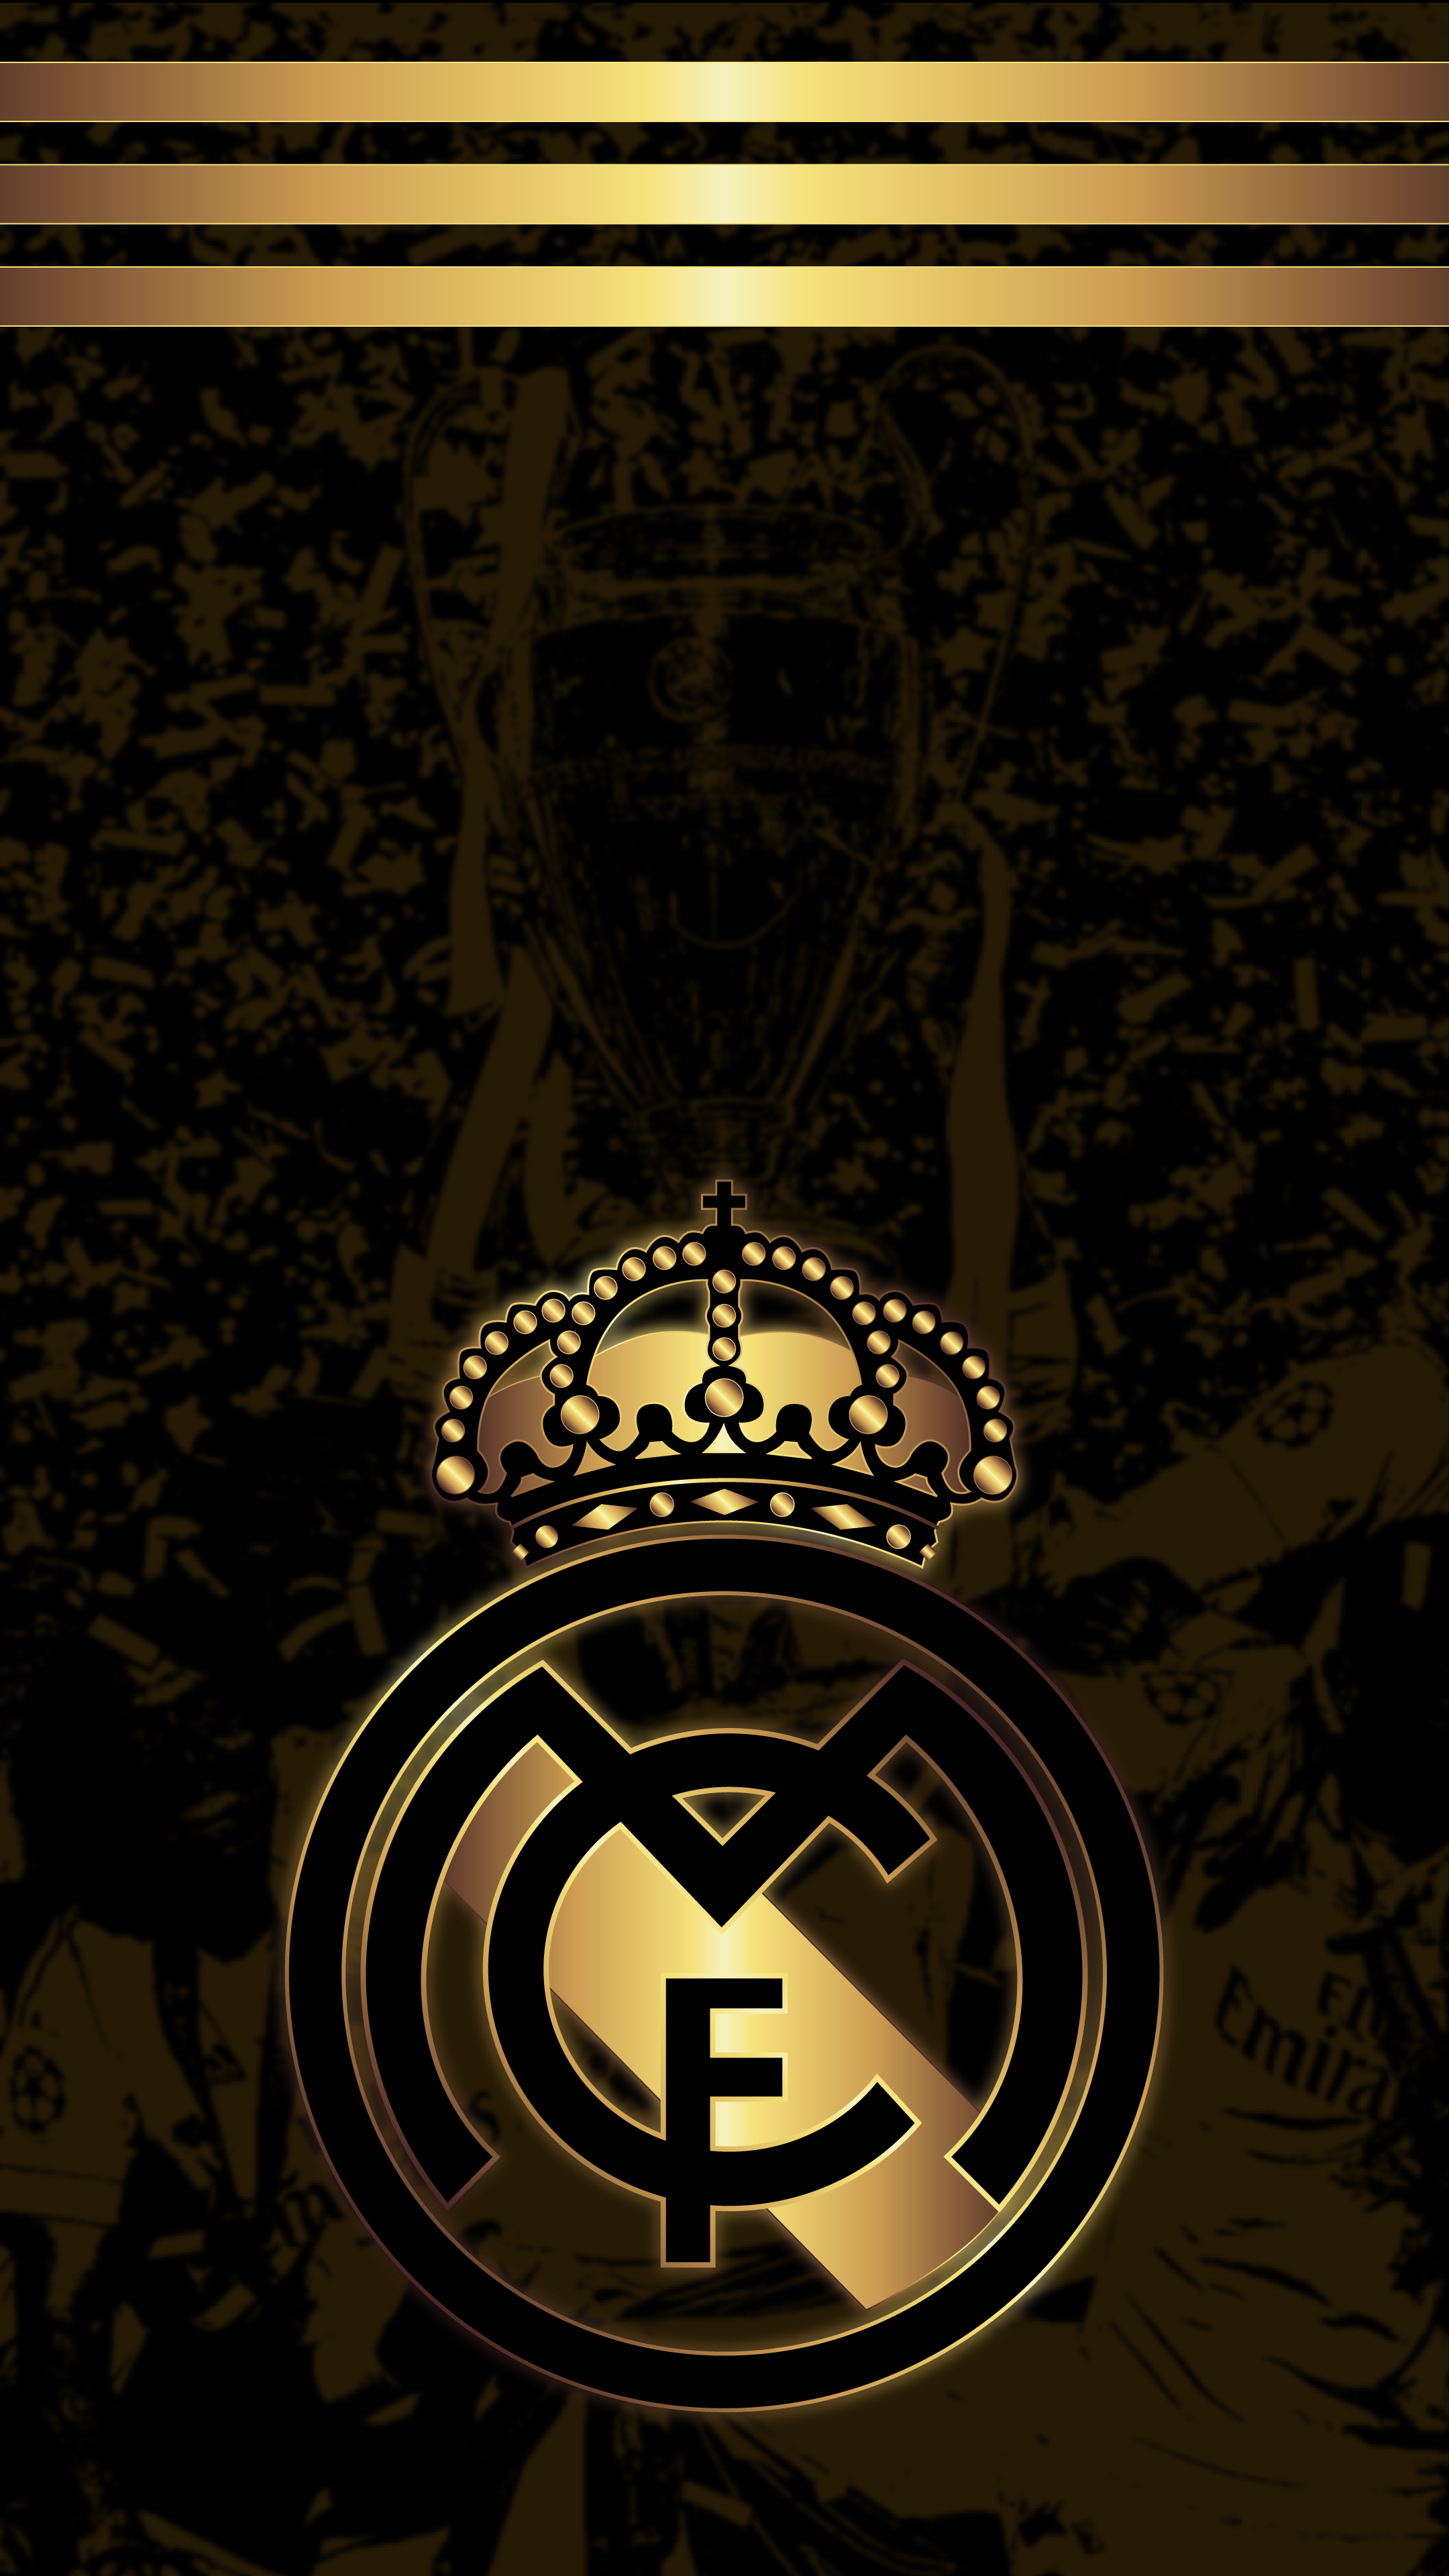 Real Madrid Wallpaper HD 2019 Football. Real madrid wallpaper, Real madrid logo wallpaper, Madrid wallpaper